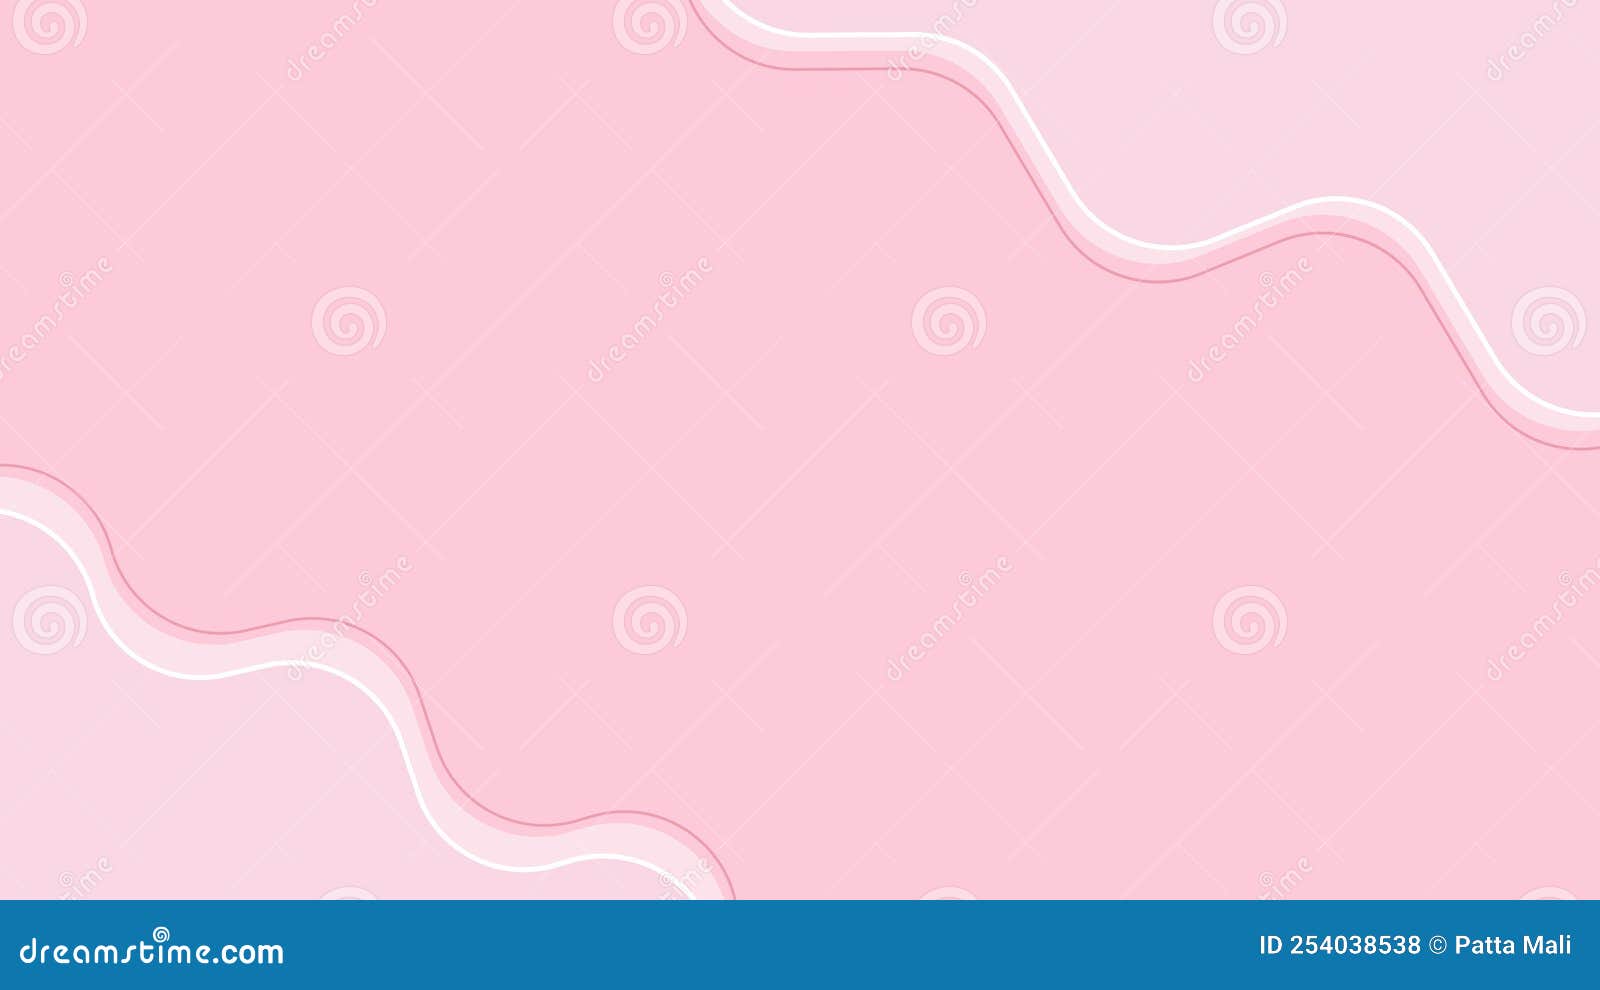 Aesthetic Minimal Cute Pastel Pink Wallpaper Illustration Stock ...